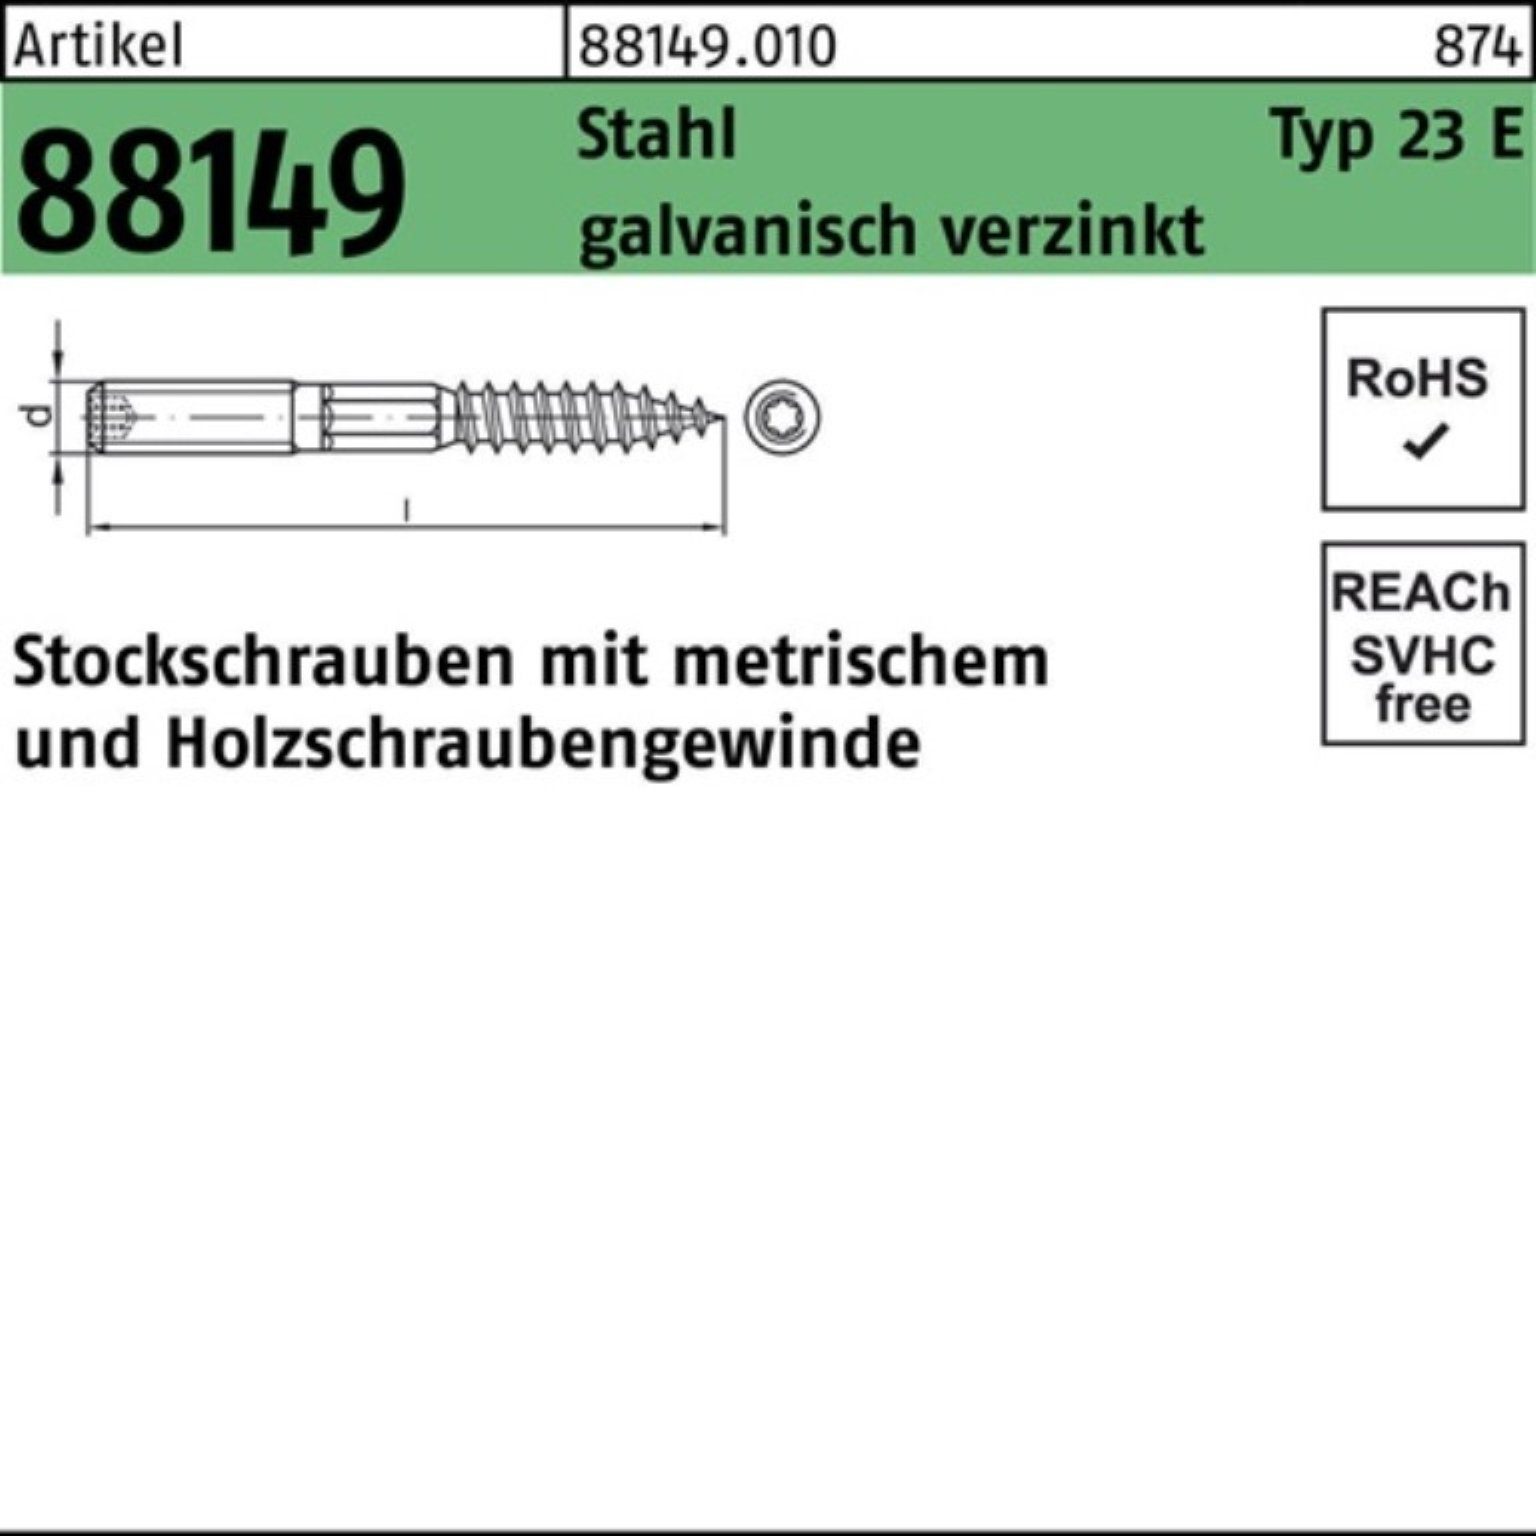 Pack 23 R Stockschraube M6x Stockschraube Reyher Typ 88149 galv.verz. 80 Stahl 100er 100 E